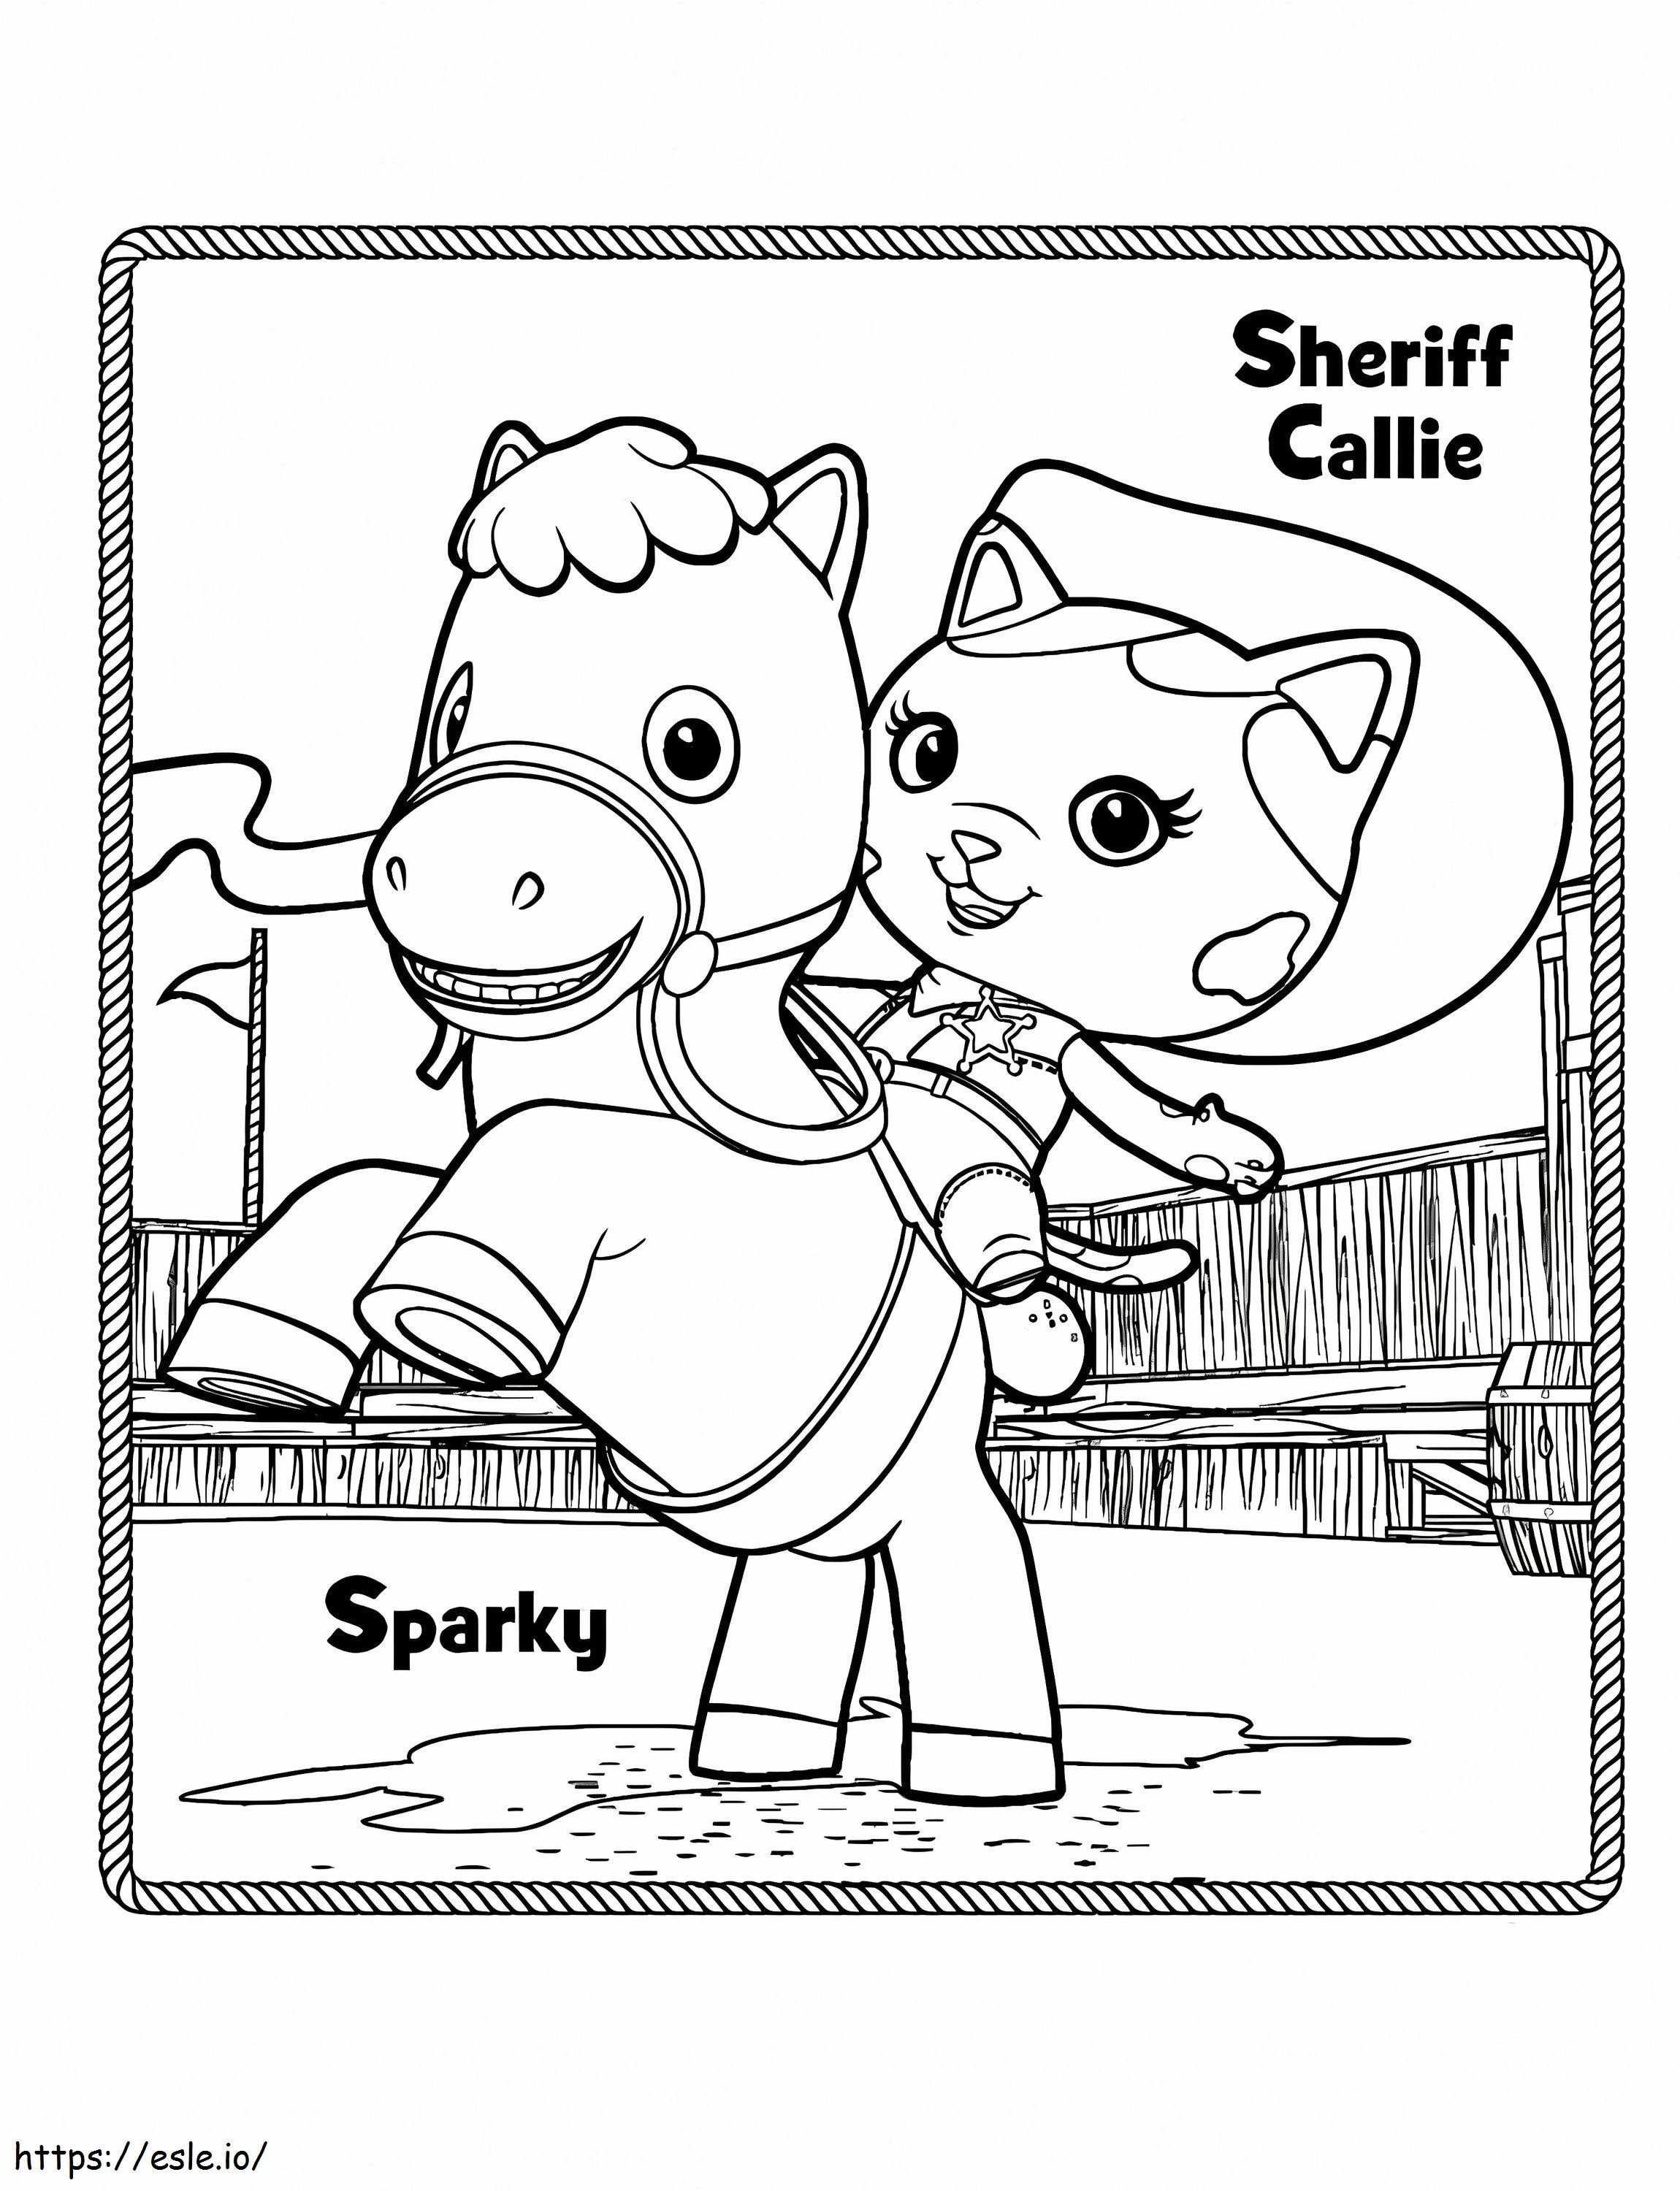 Sparky ve Şerif Callie boyama